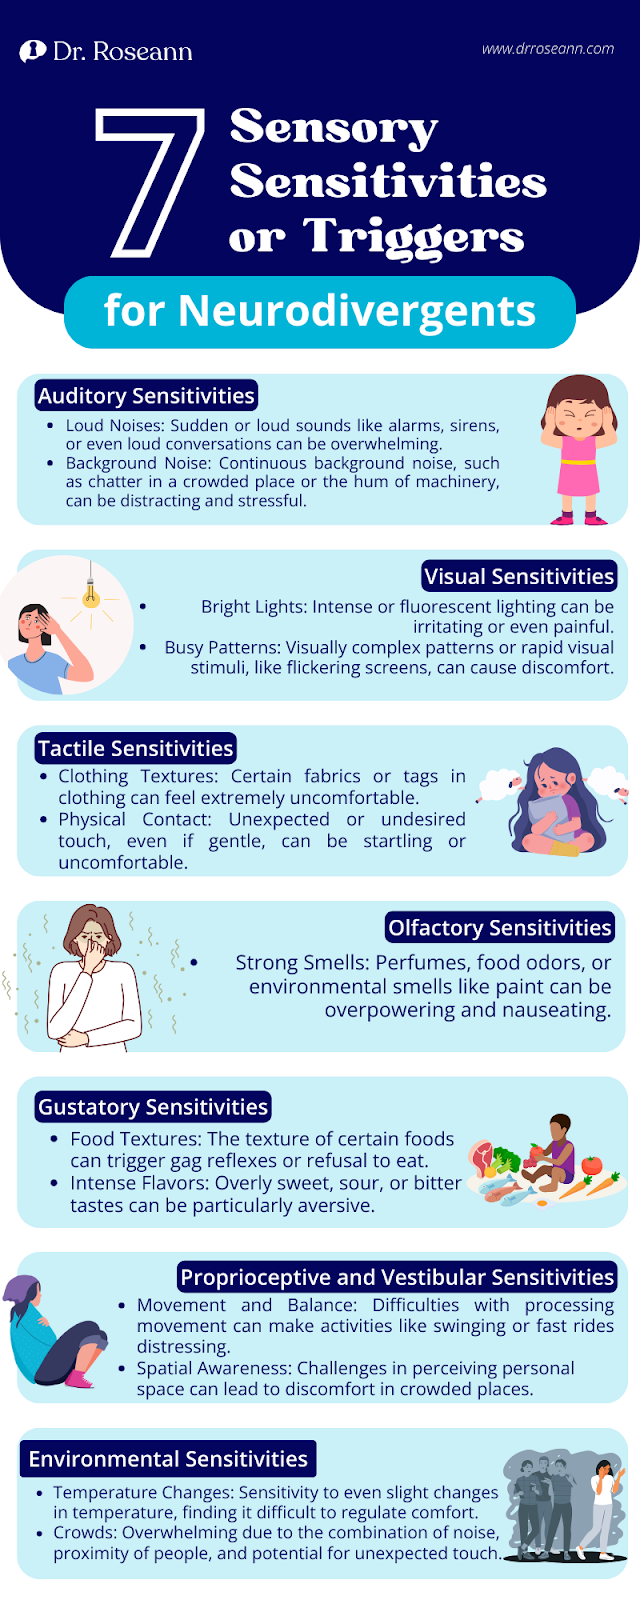 7 Sensory Sensitivities or Triggers